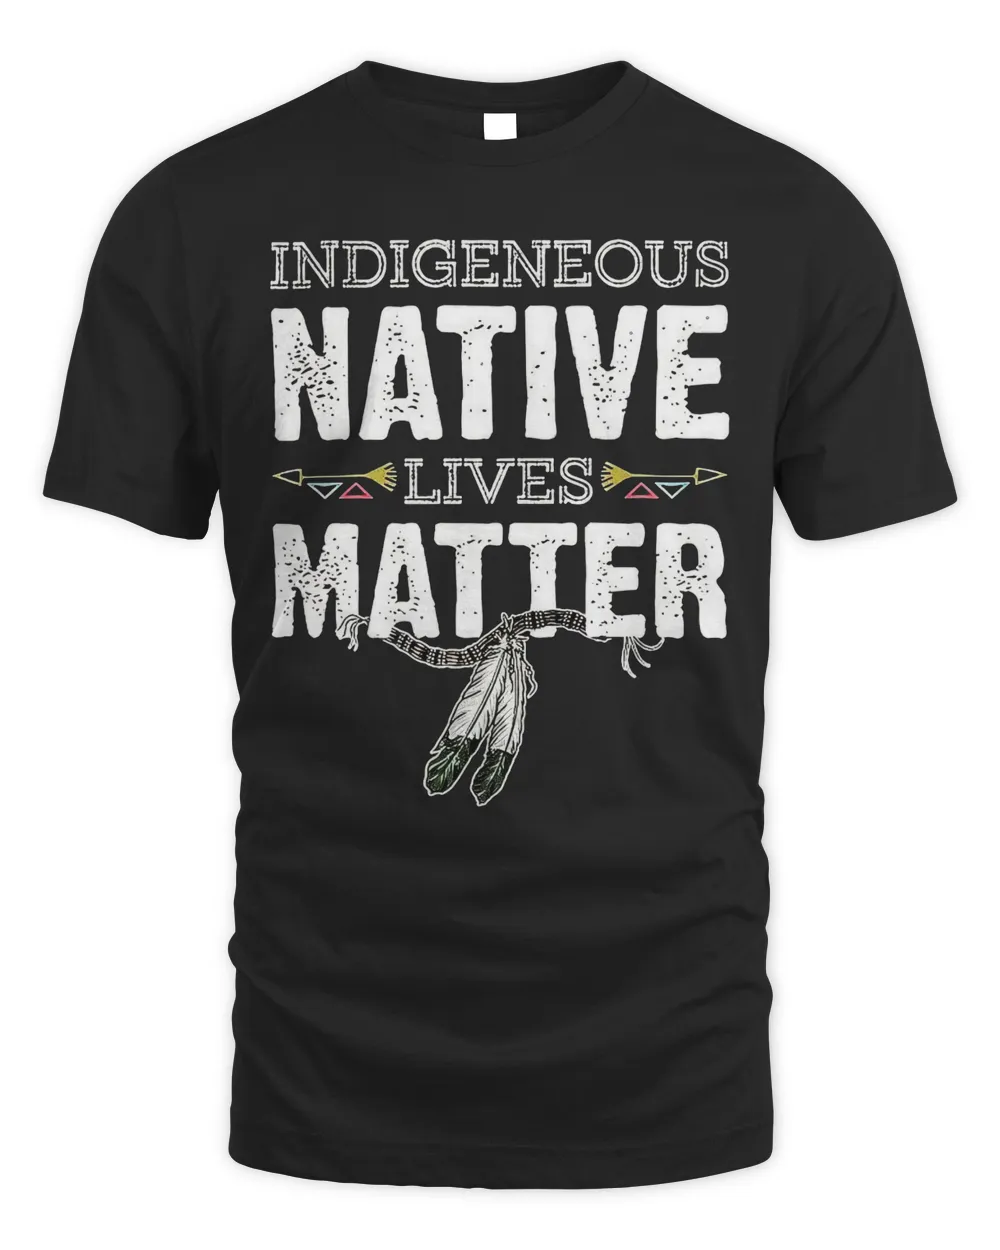 naa-cbx-28 Indigenous Native Lives Matter